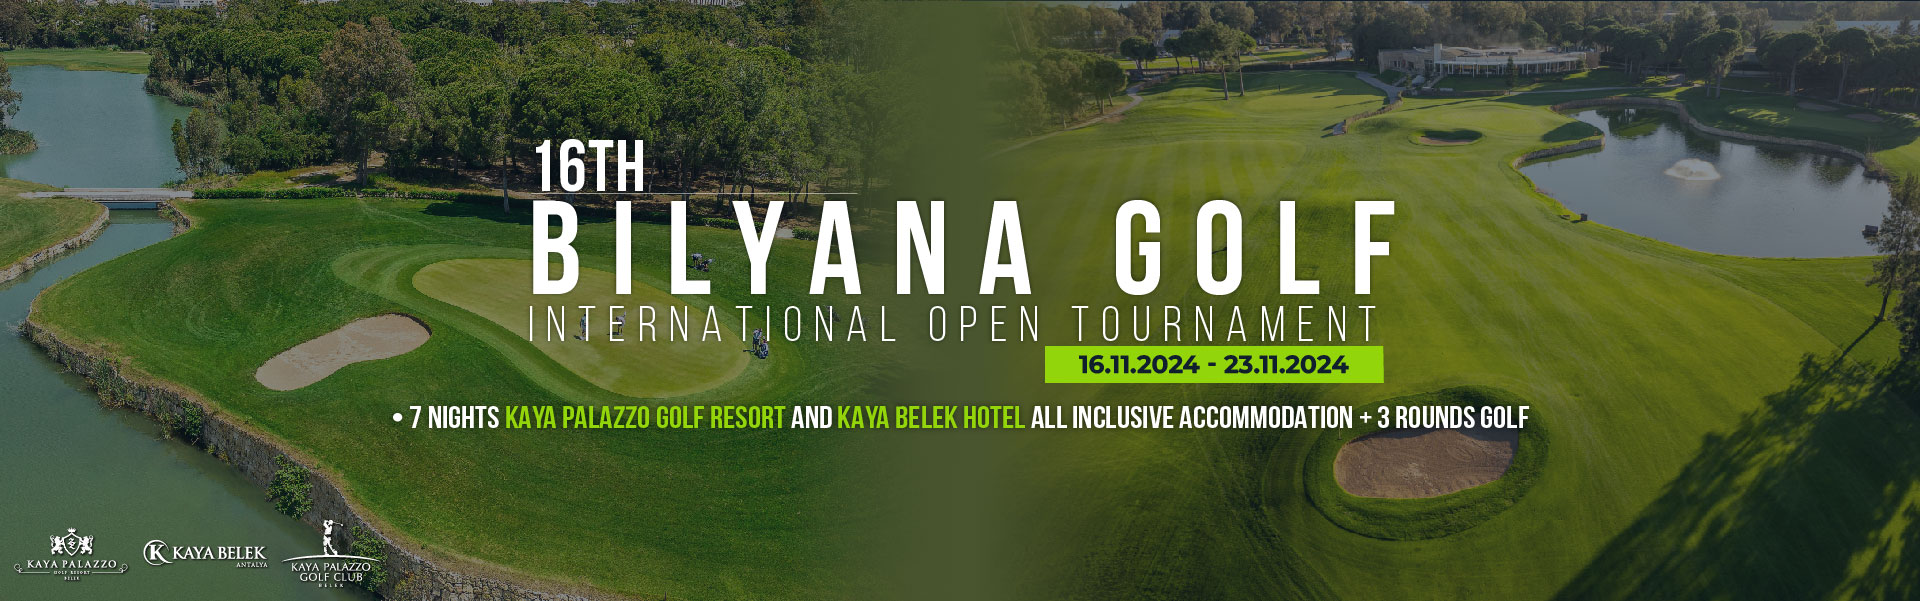 Bilyana Golf - 16Th BILYANA GOLF INTERNATIONAL OPEN TOURNAMENT